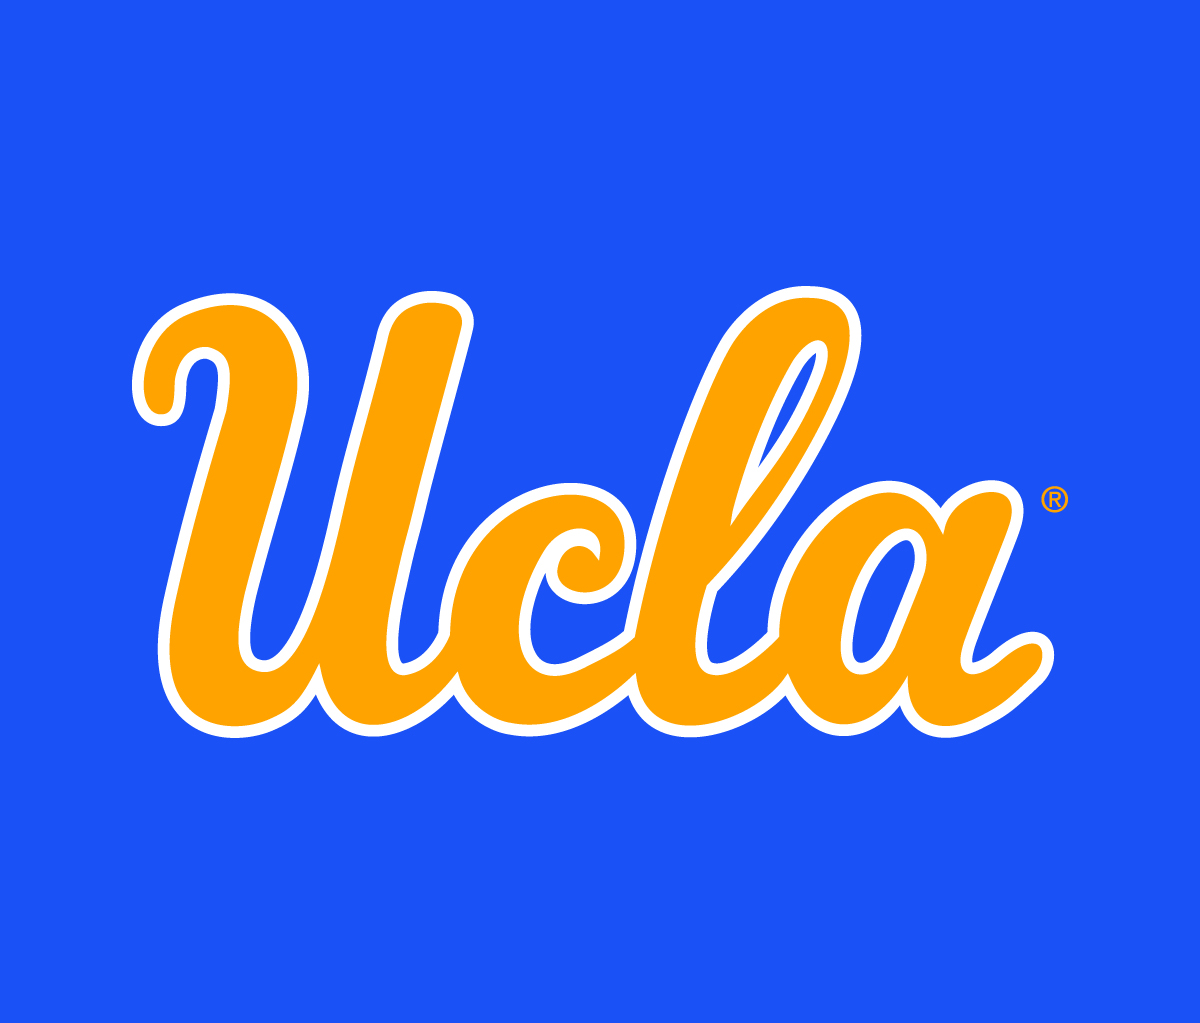 ucla logo.jpg